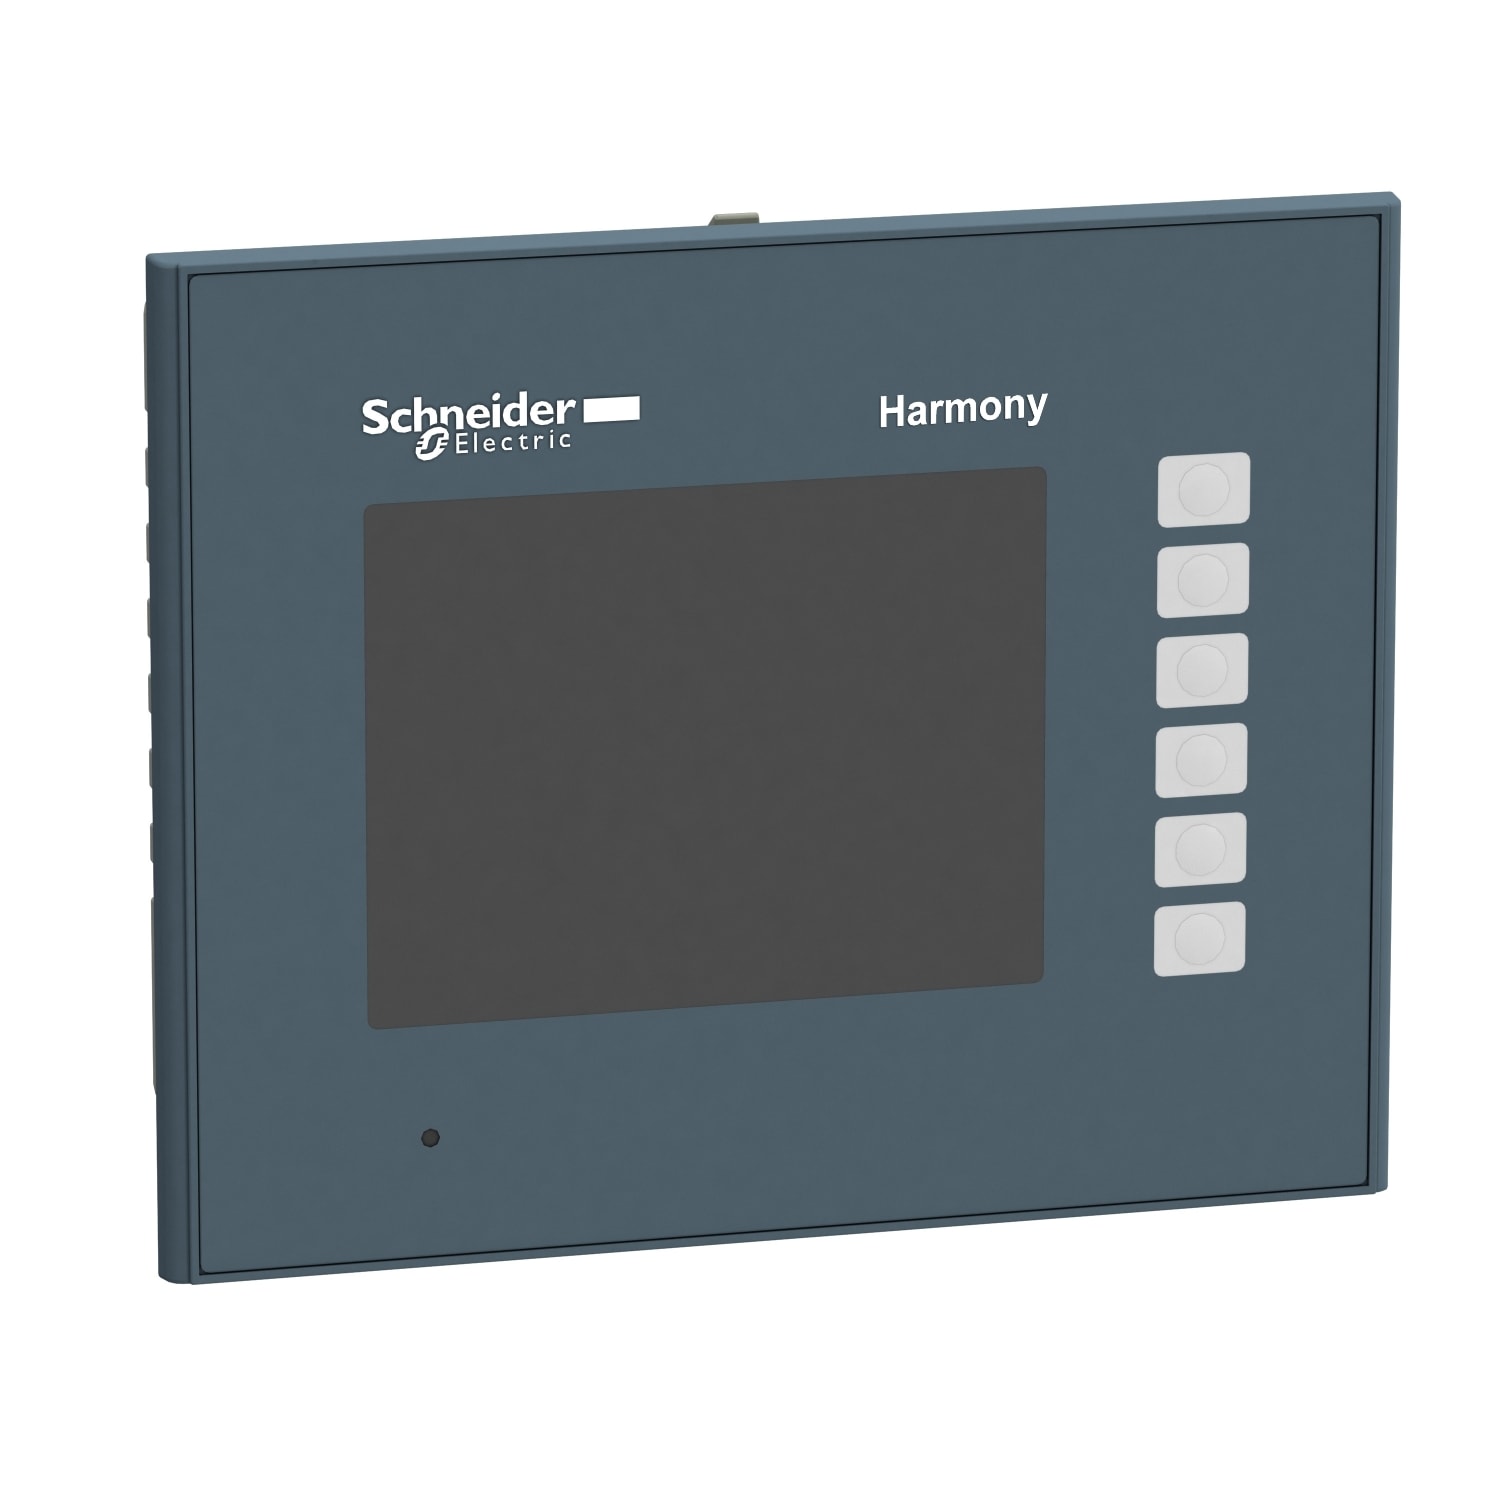 Schneider Electric - Harmony GTO - terminal IHM ecran tactile - 320x240 pixels QVGA - 3,5p TFT - 96MB